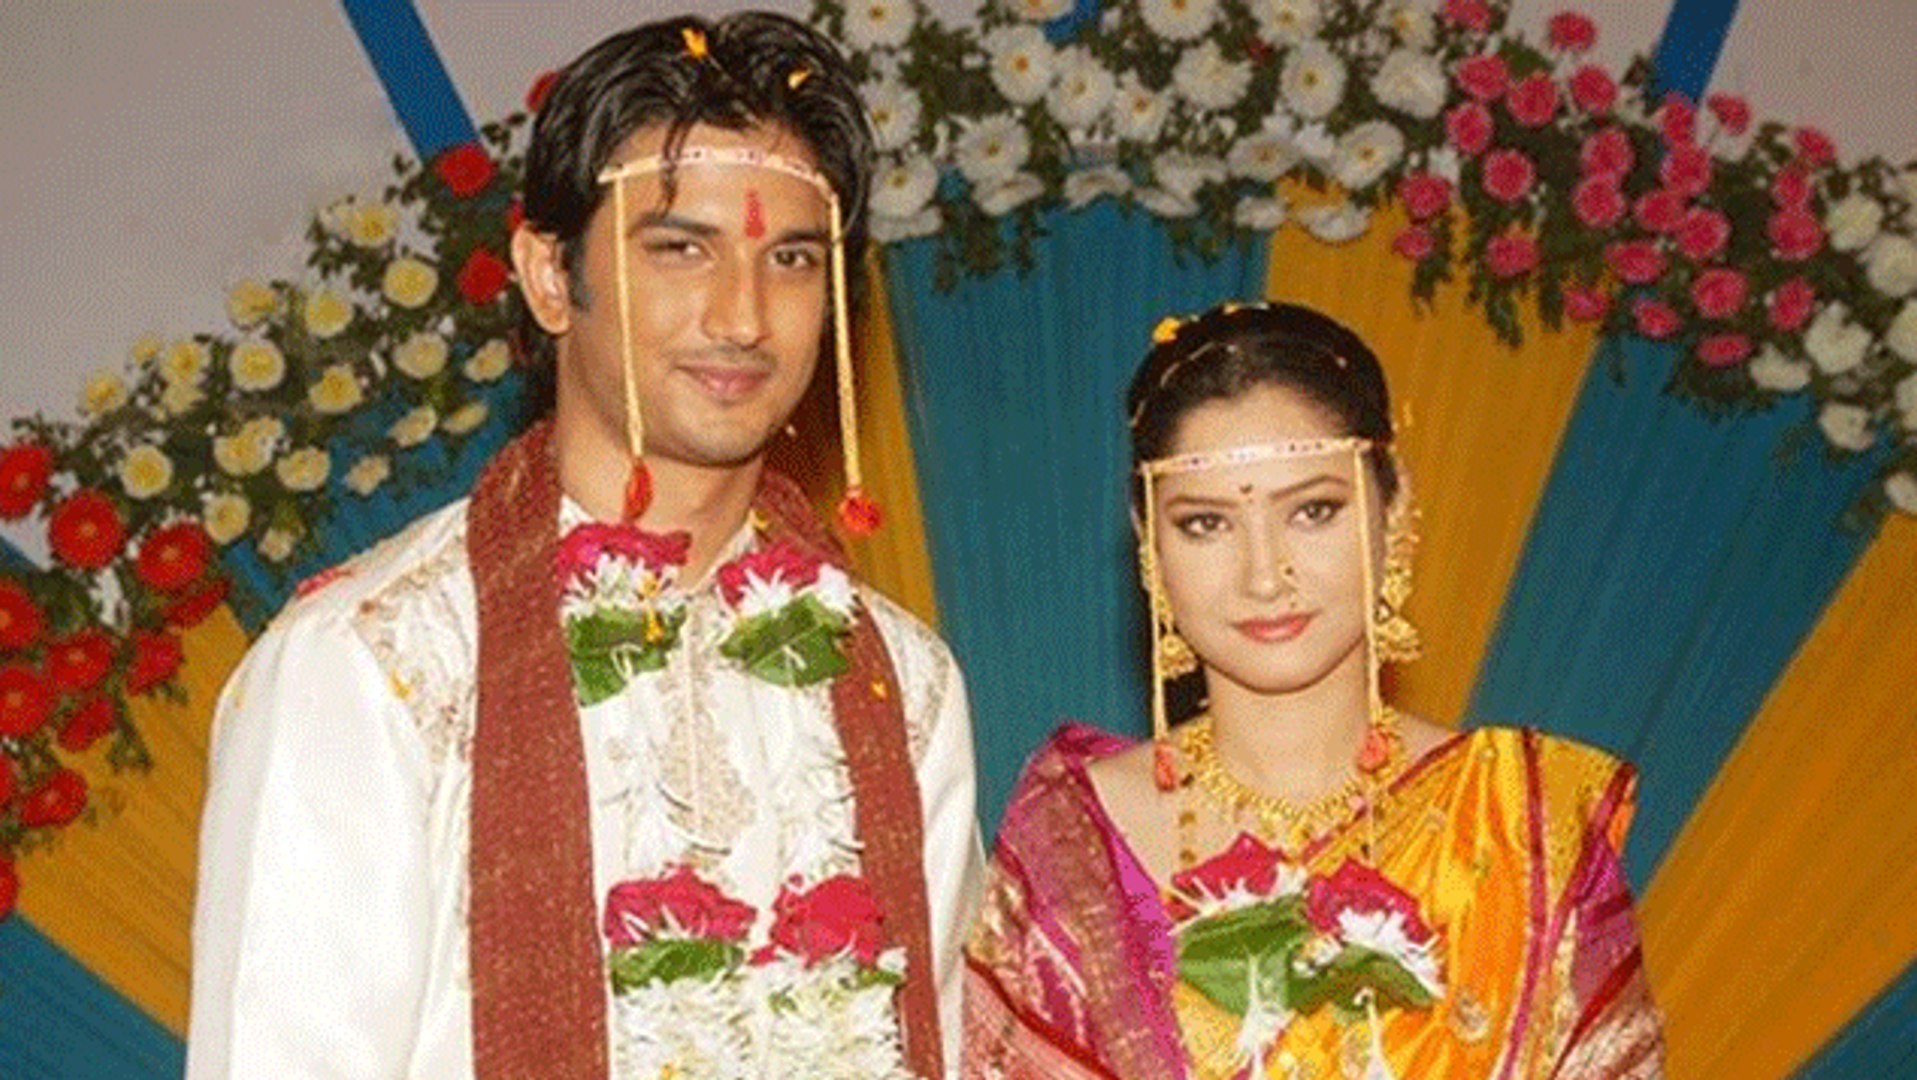 Sushant Singh Rajput Secretly Married Girlfriend Ankita Lokhande